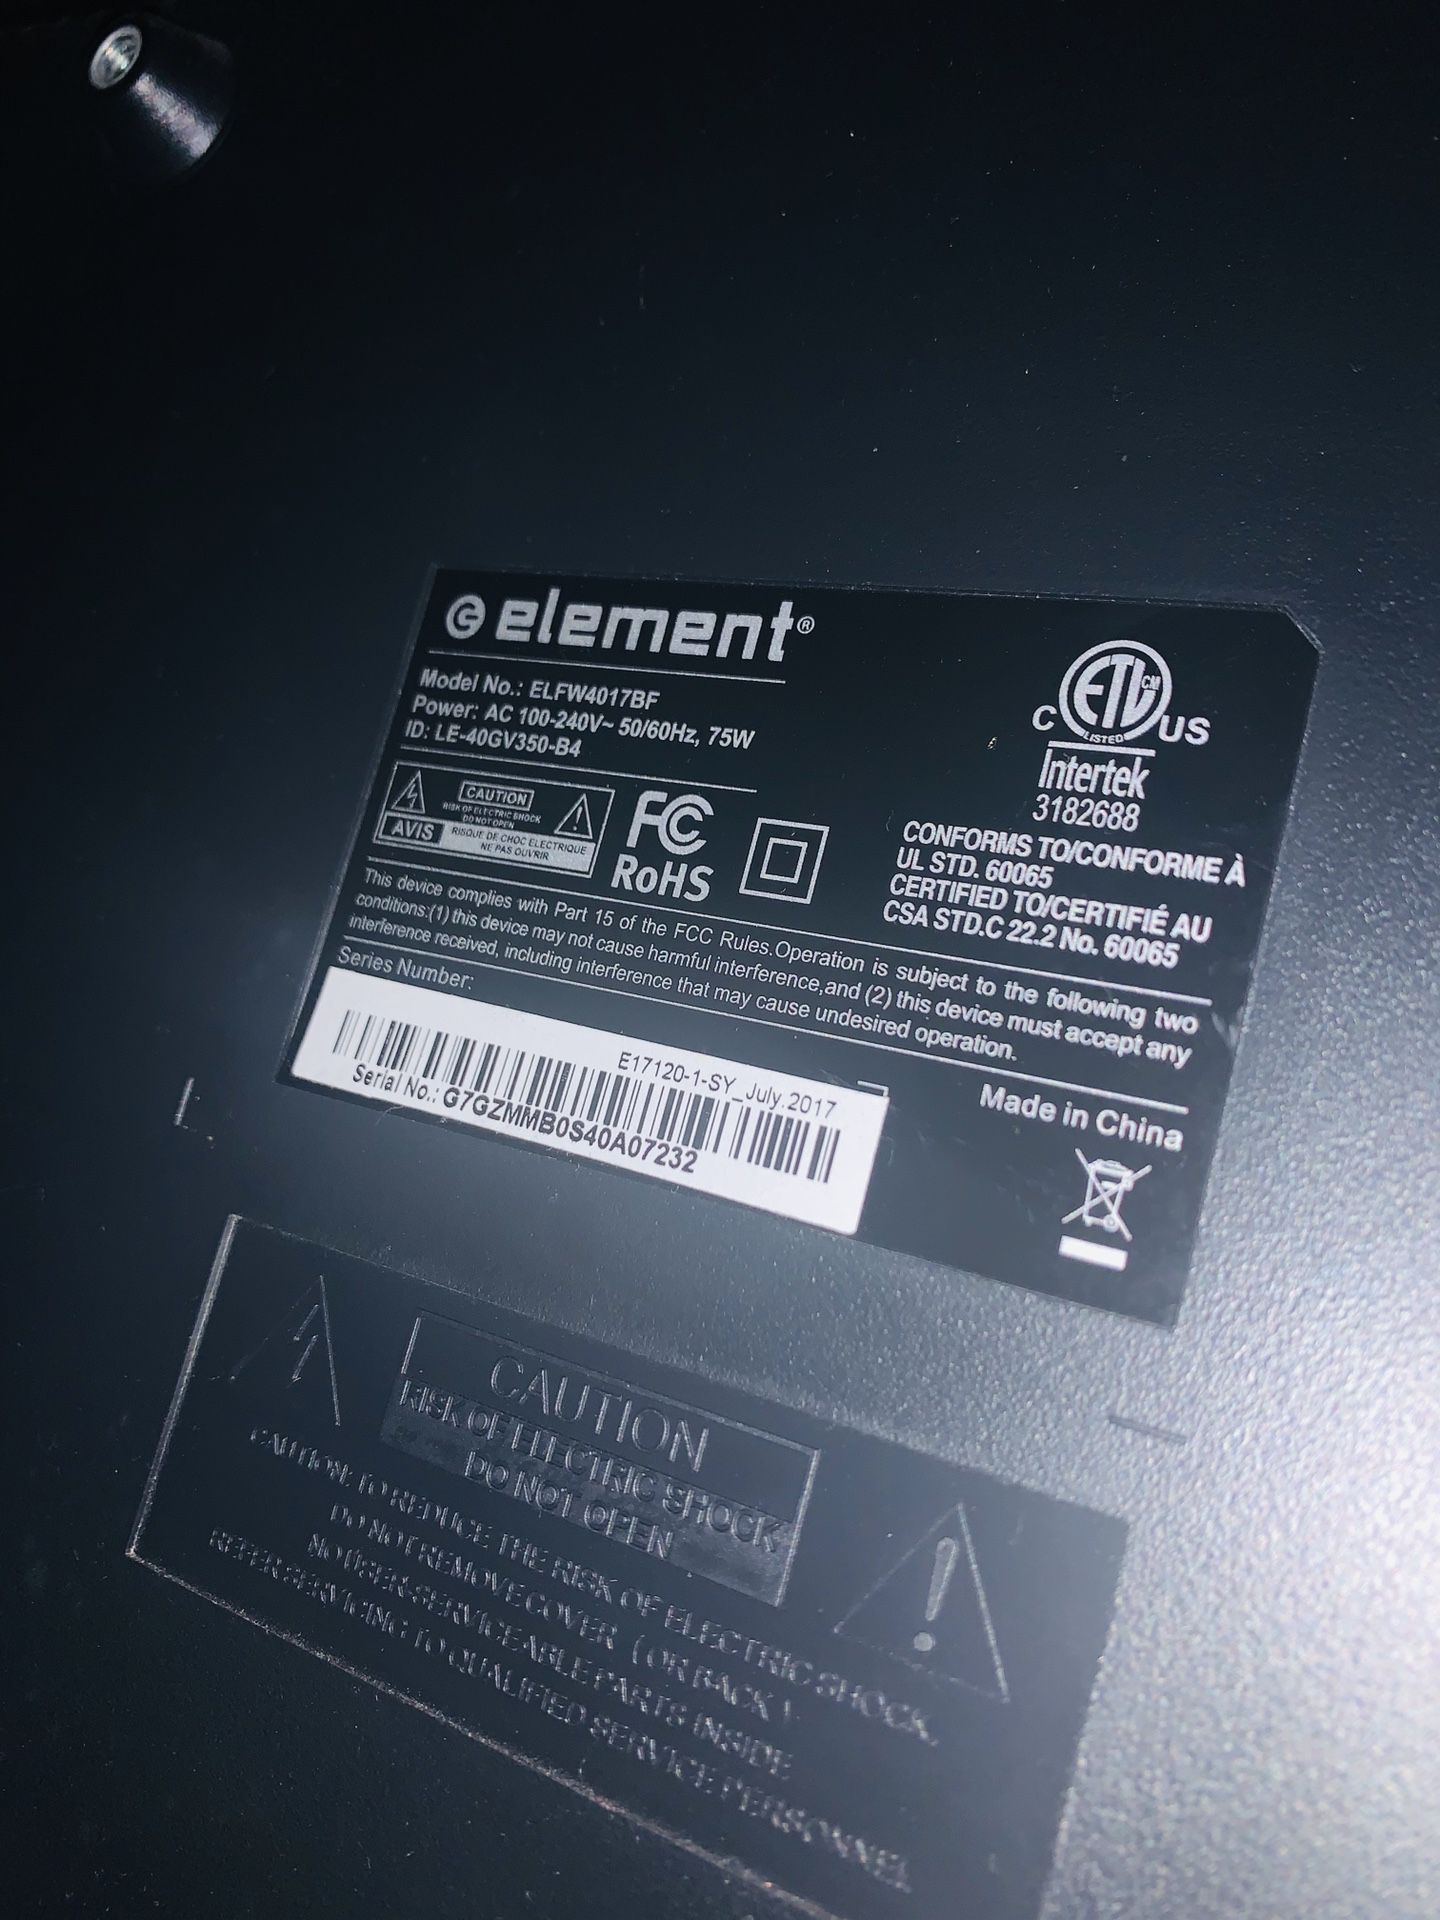 Element Tv